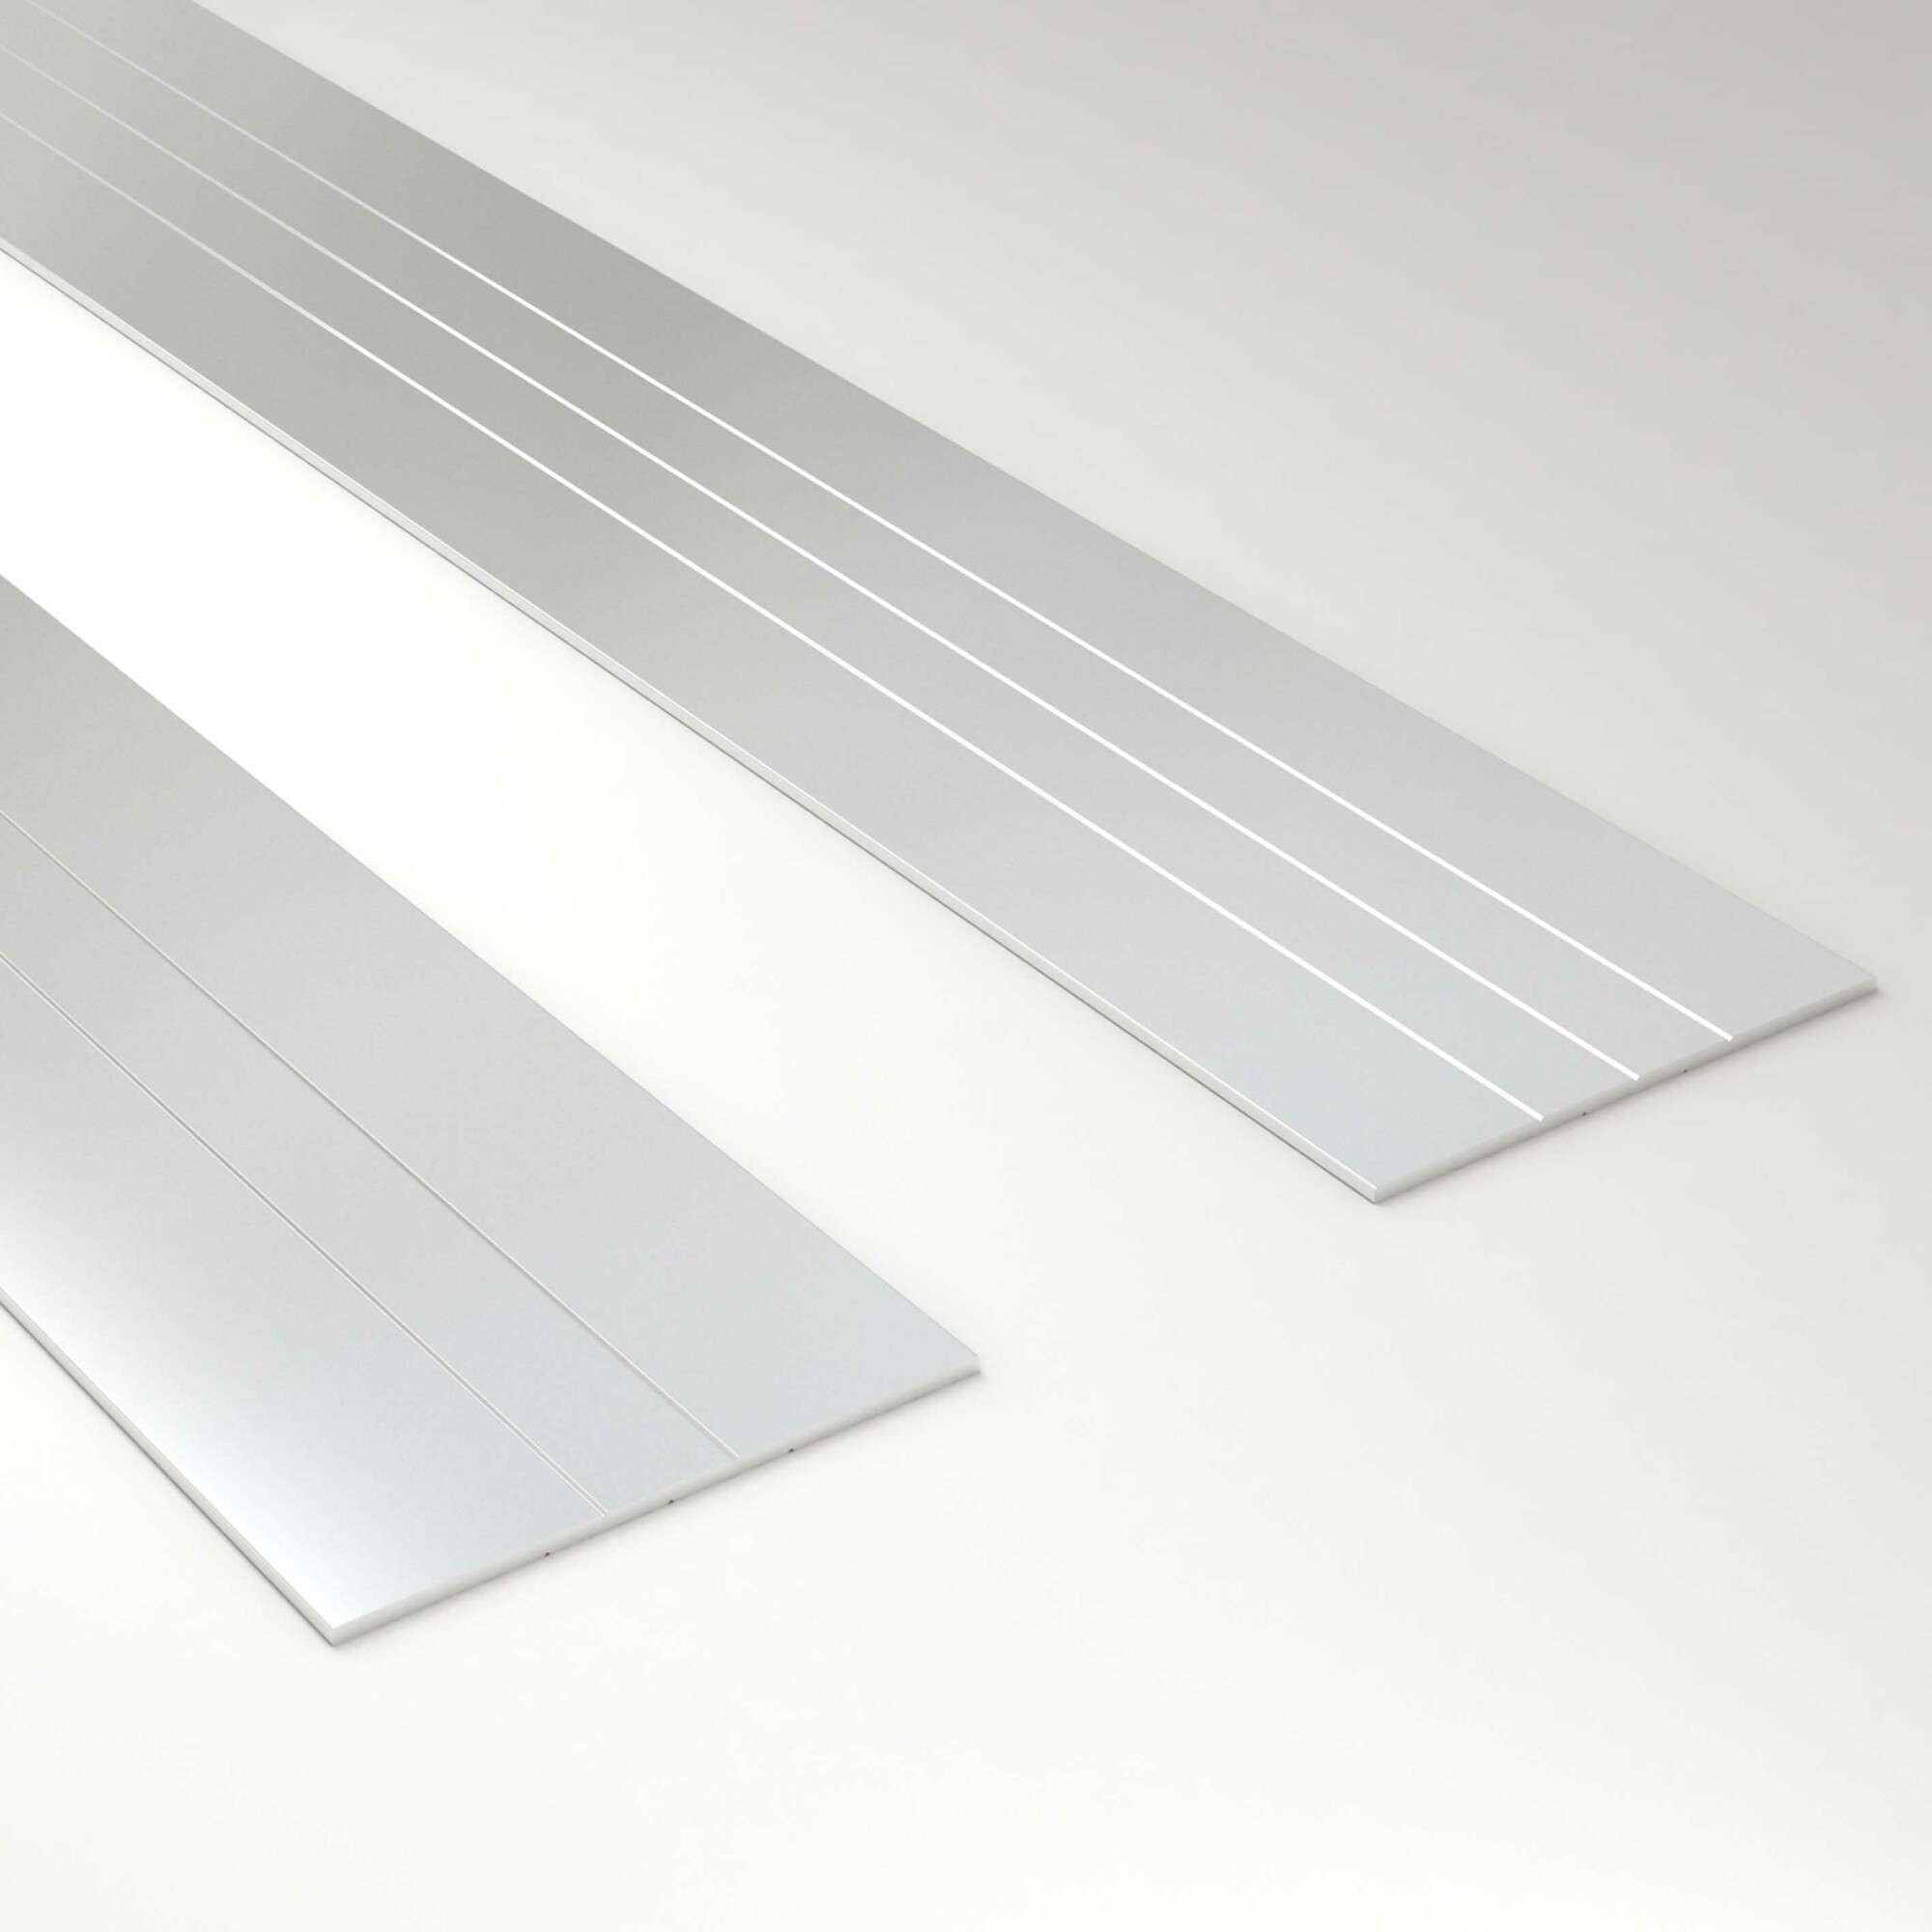 Pletinas de aluminio para iluminación lineal